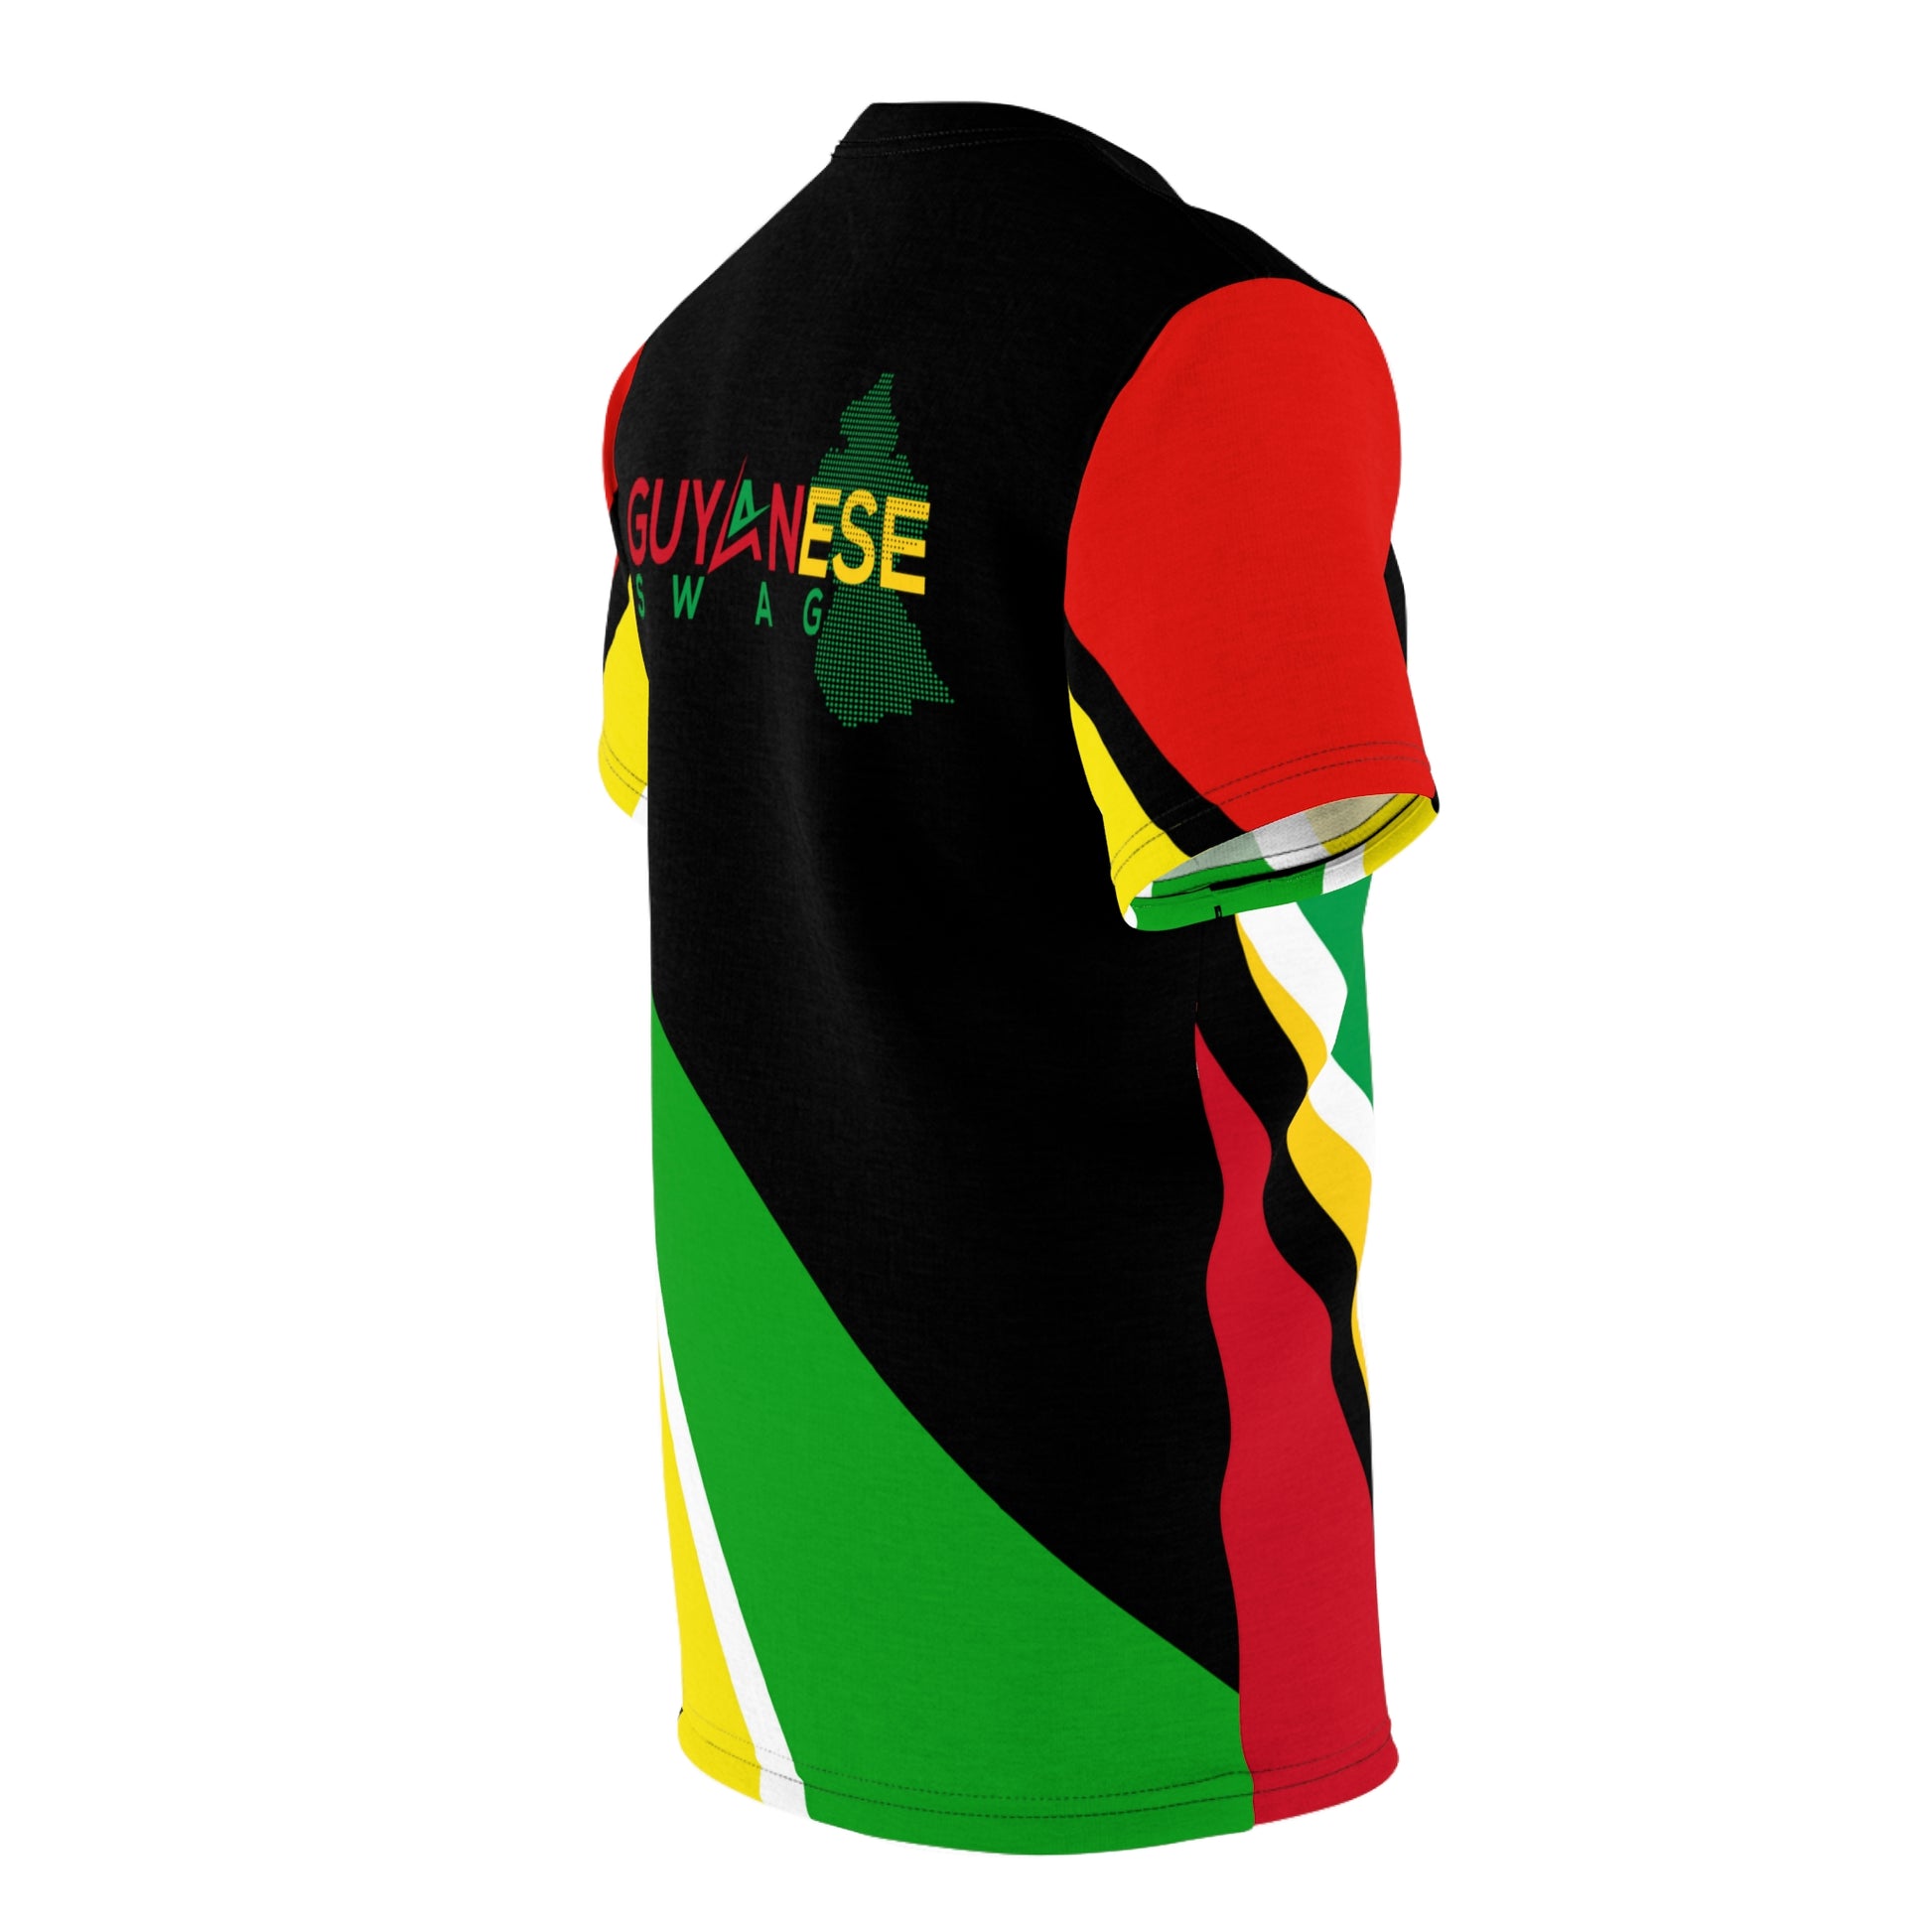 Guyana Flag Coat of Arms Short Sleeve Men T-Shirt.